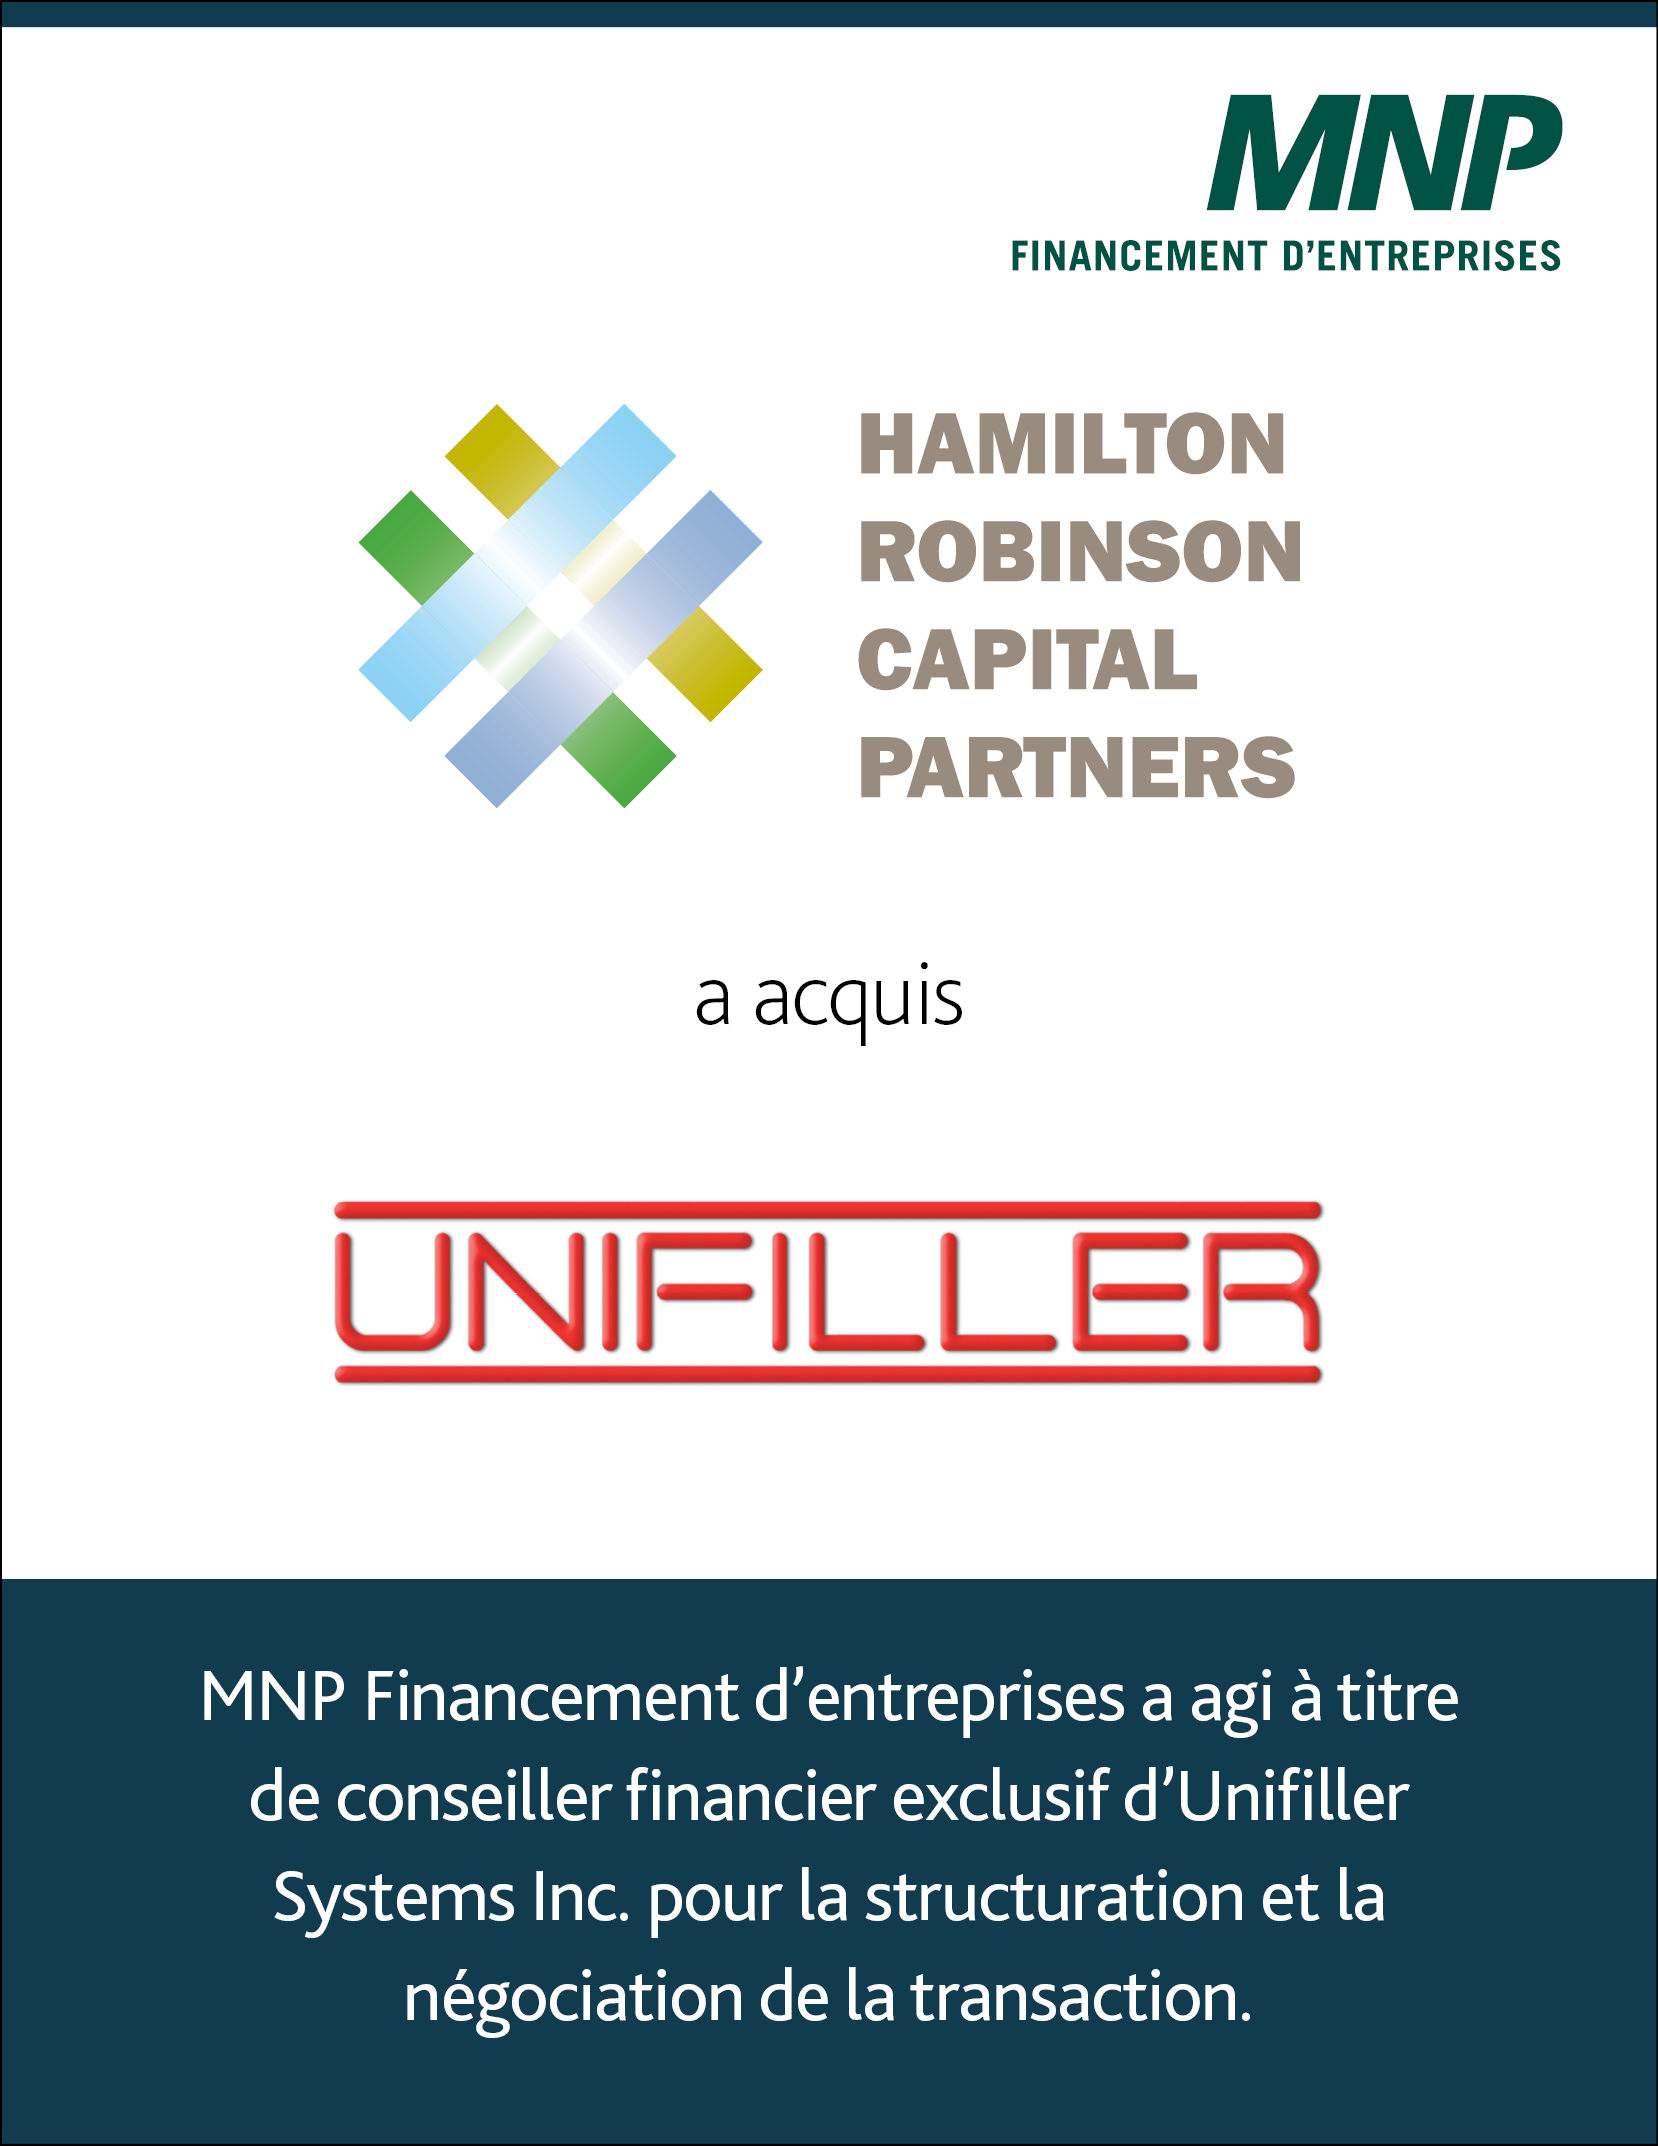 Hamilton Robinson Capital Partners LLC a fait a acquis Unifiller Systems Inc.